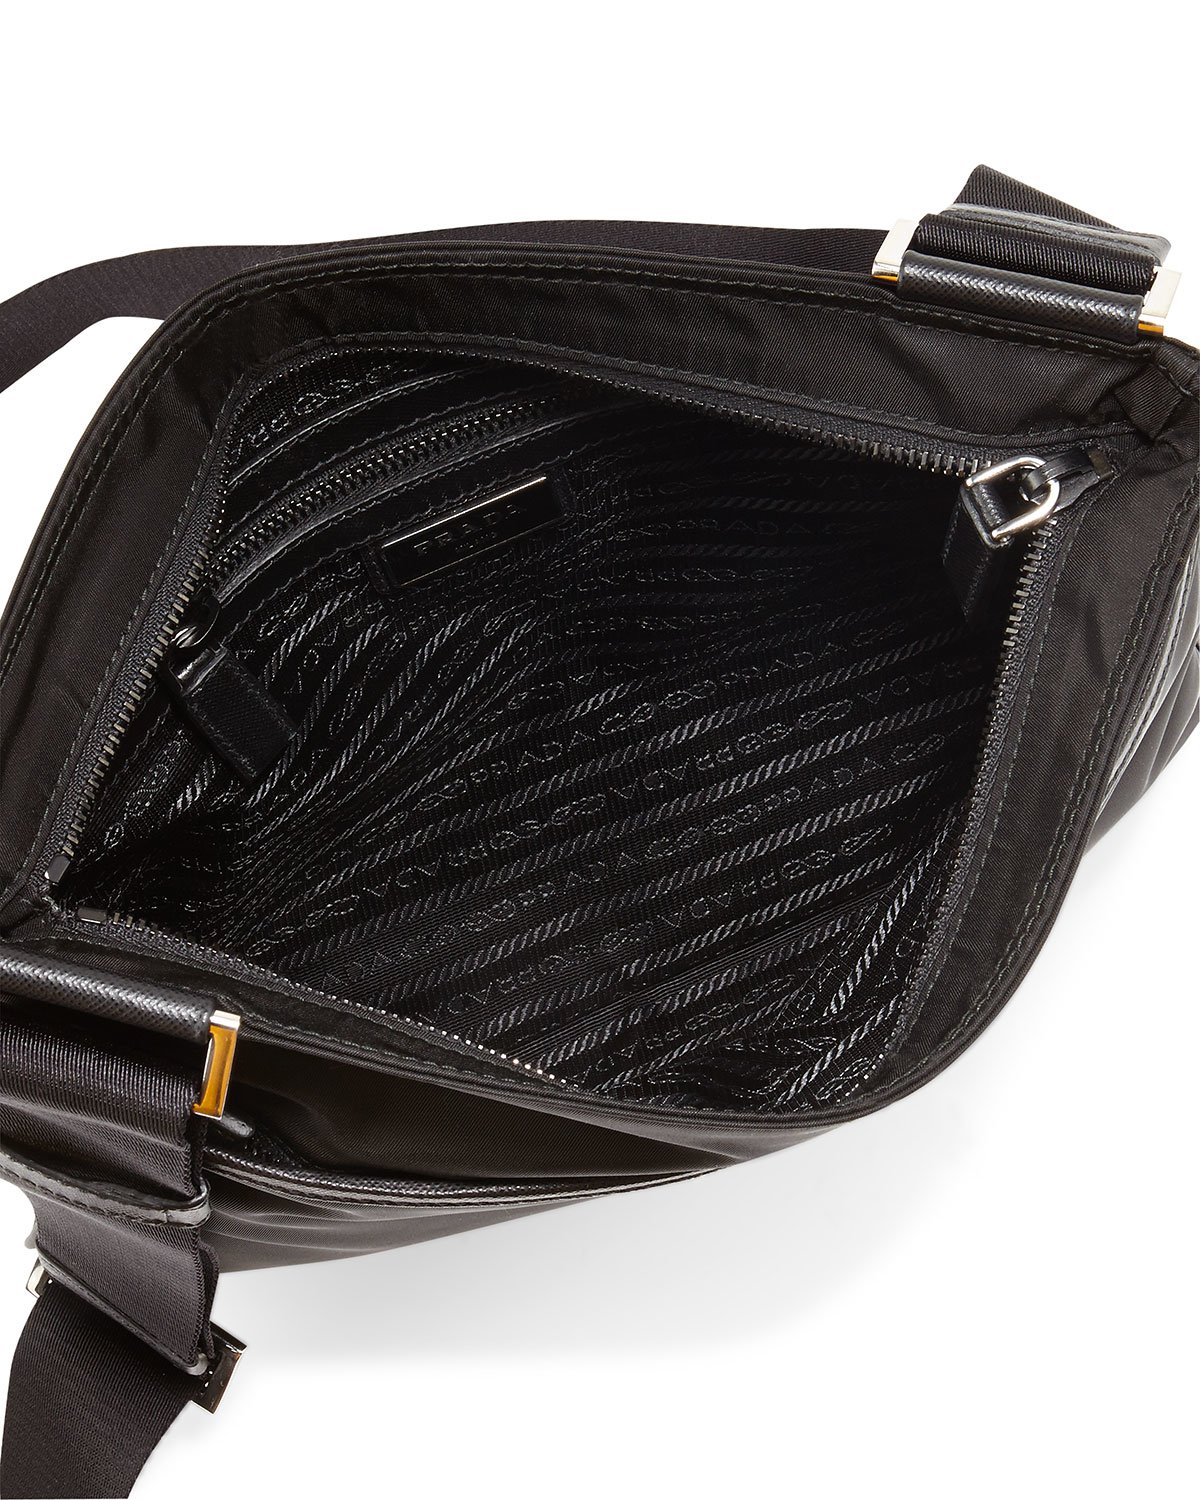 Lyst - Prada Nylon Crossbody Bag in Black